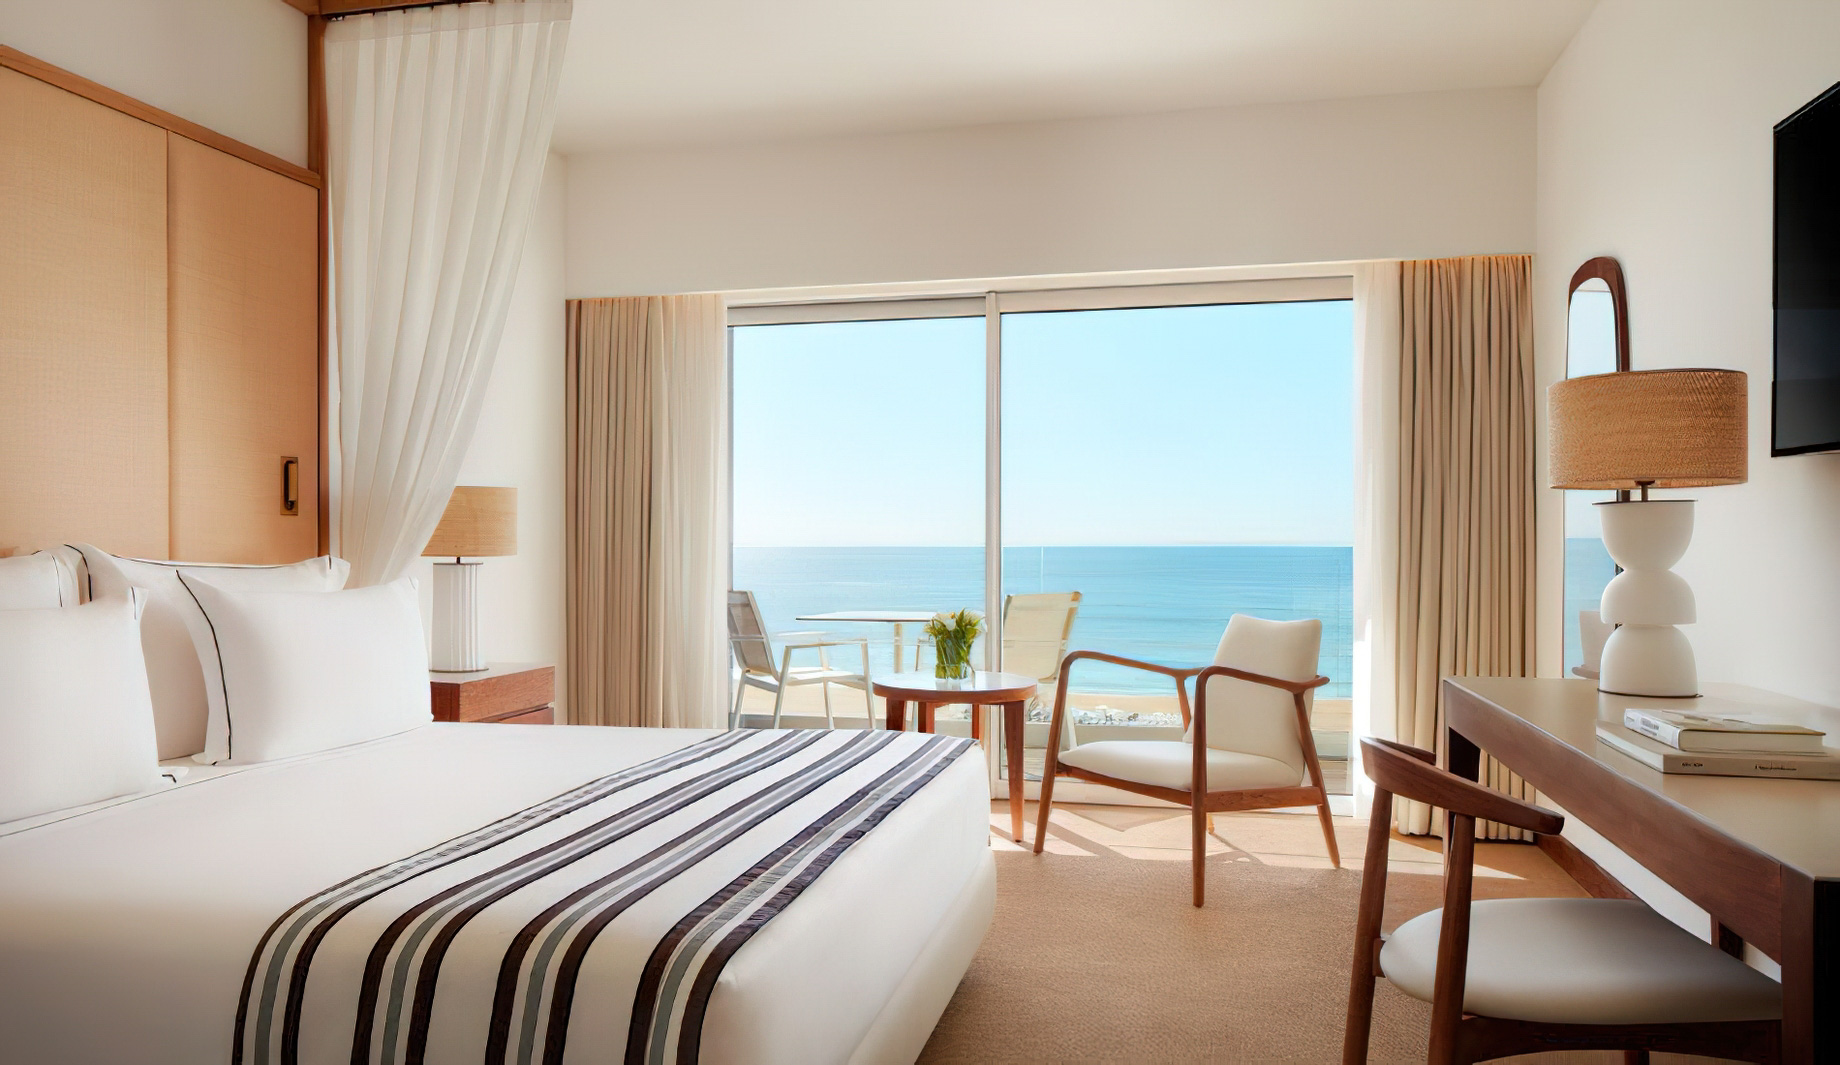 Tivoli Marina Vilamoura Algarve Resort - Portugal - Superior Room